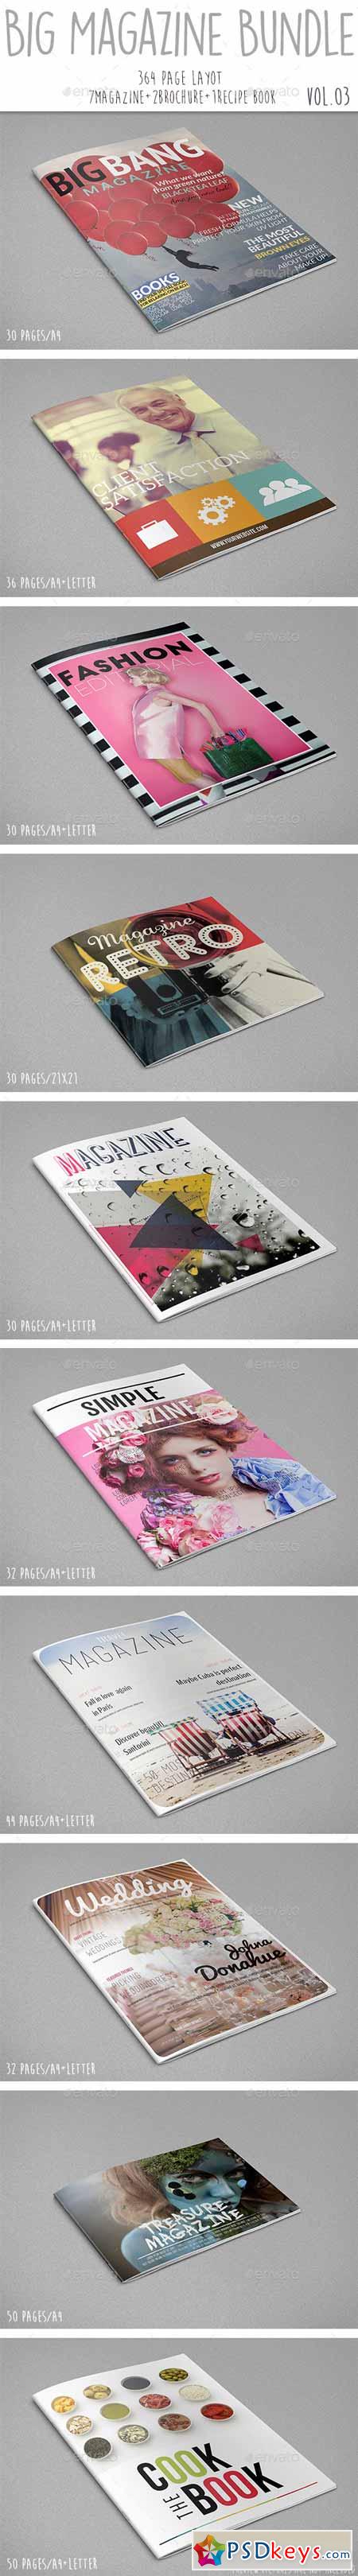 Big Magazine Bundle Vol.03